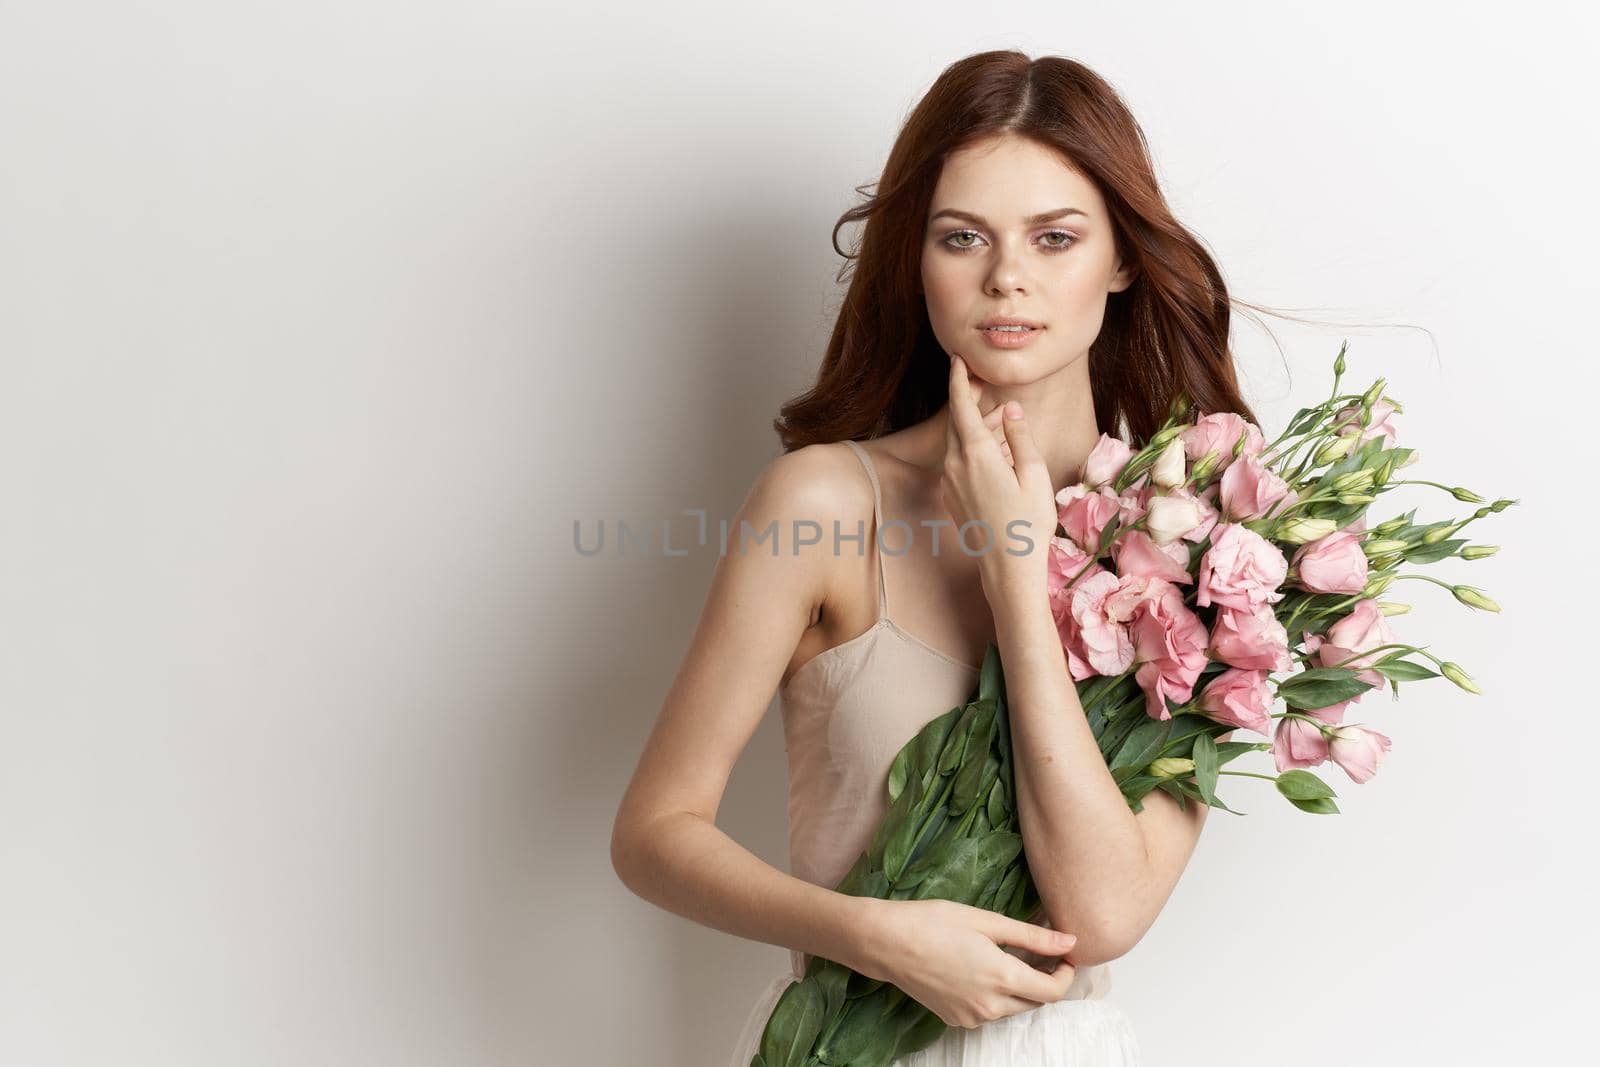 beautiful woman pink flower bouquet fashion summer light background by Vichizh